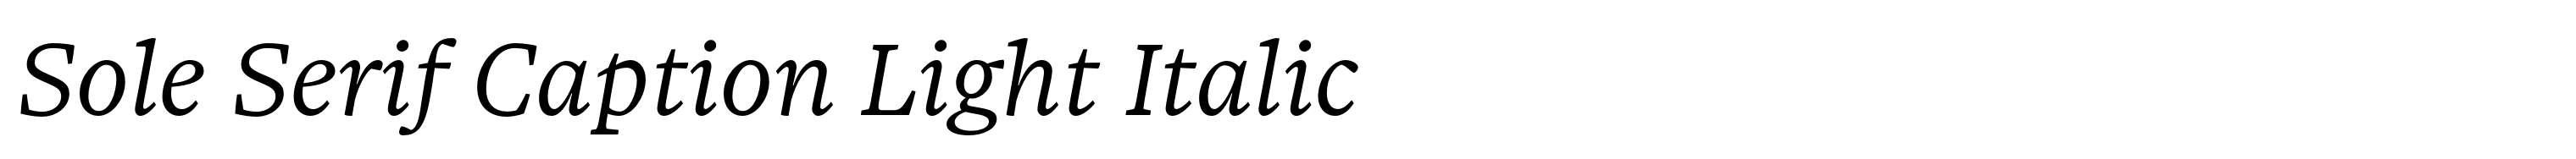 Sole Serif Caption Light Italic